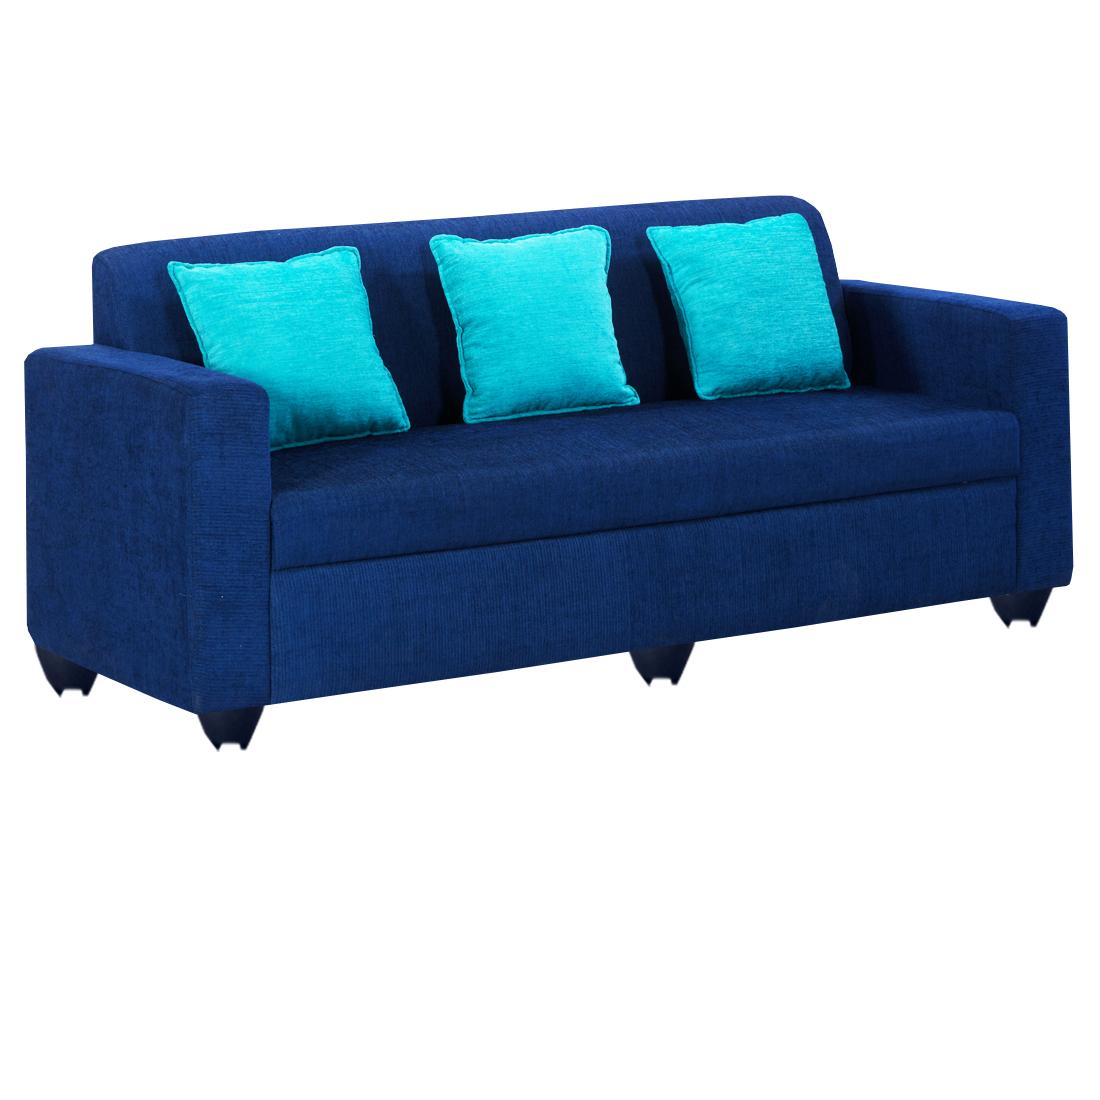 Bharat Lifestyle Desy Fabric 3 Seater, Dark Blue Colour Sofa Set